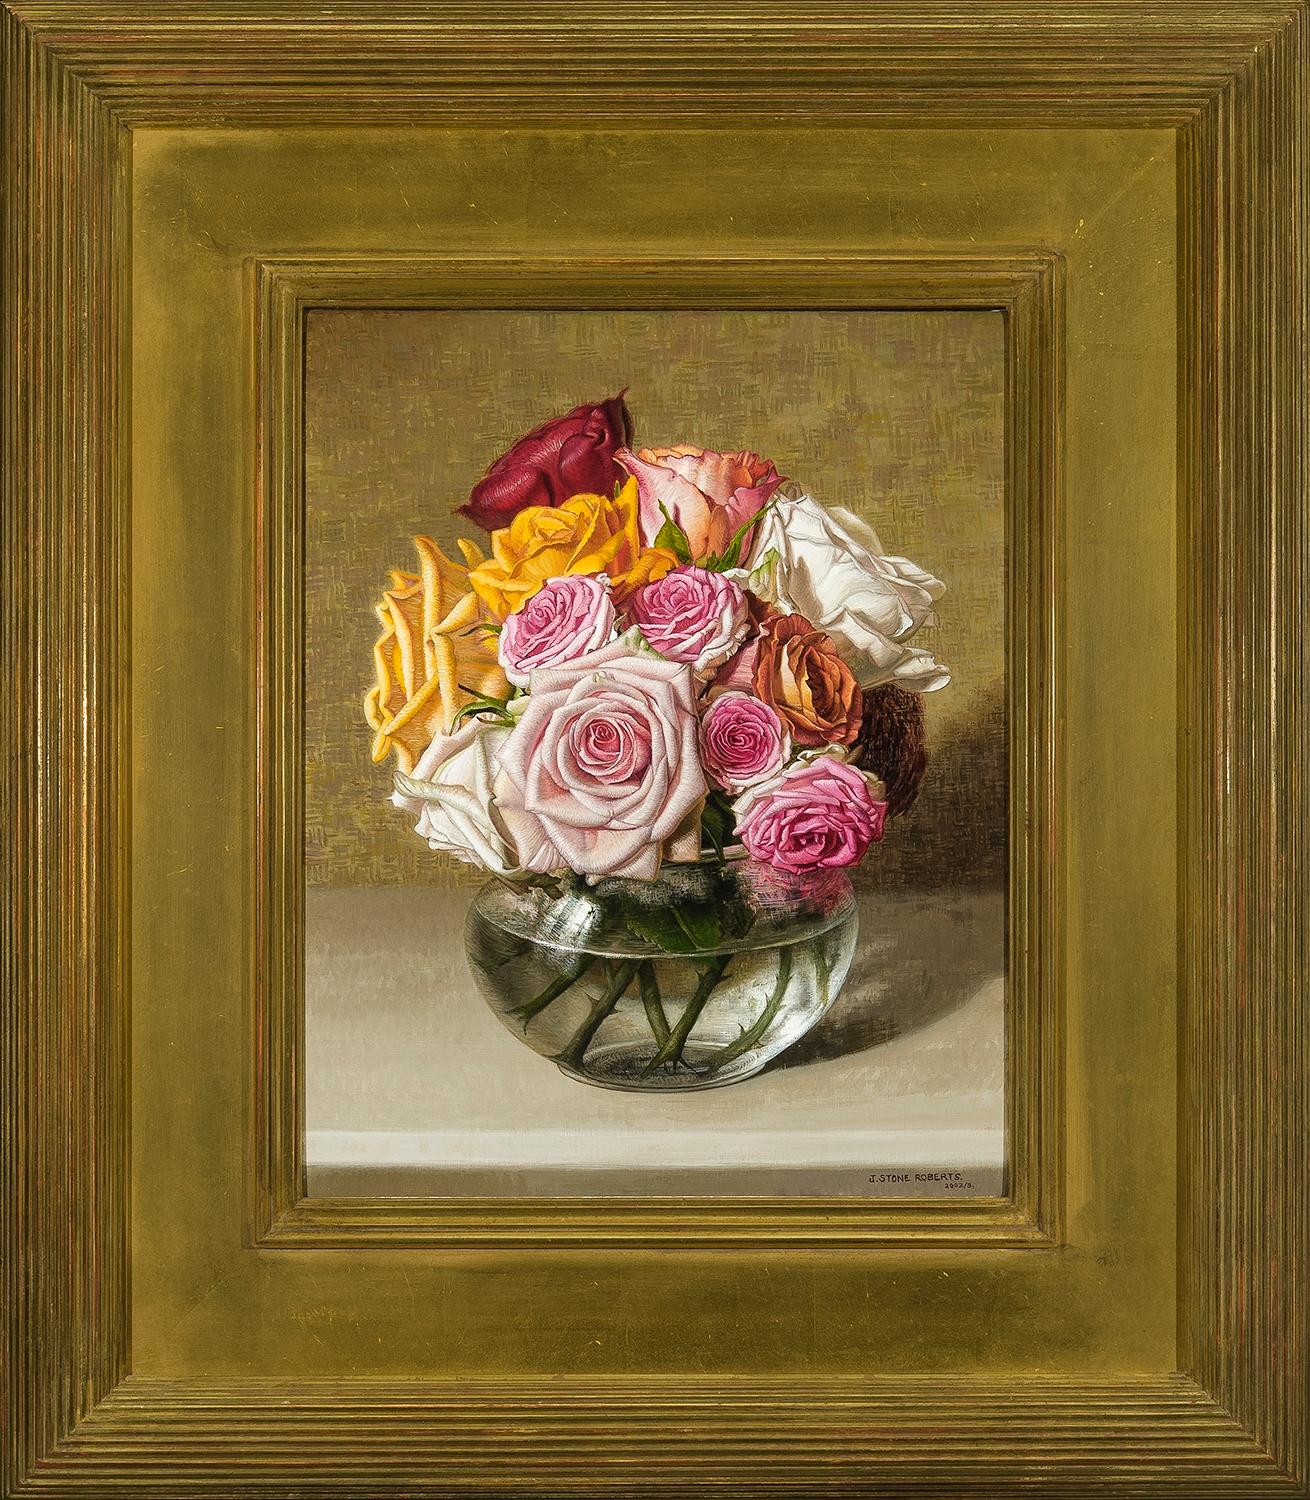 utumn Roses (Braun), Still-Life Painting, von Stone Roberts